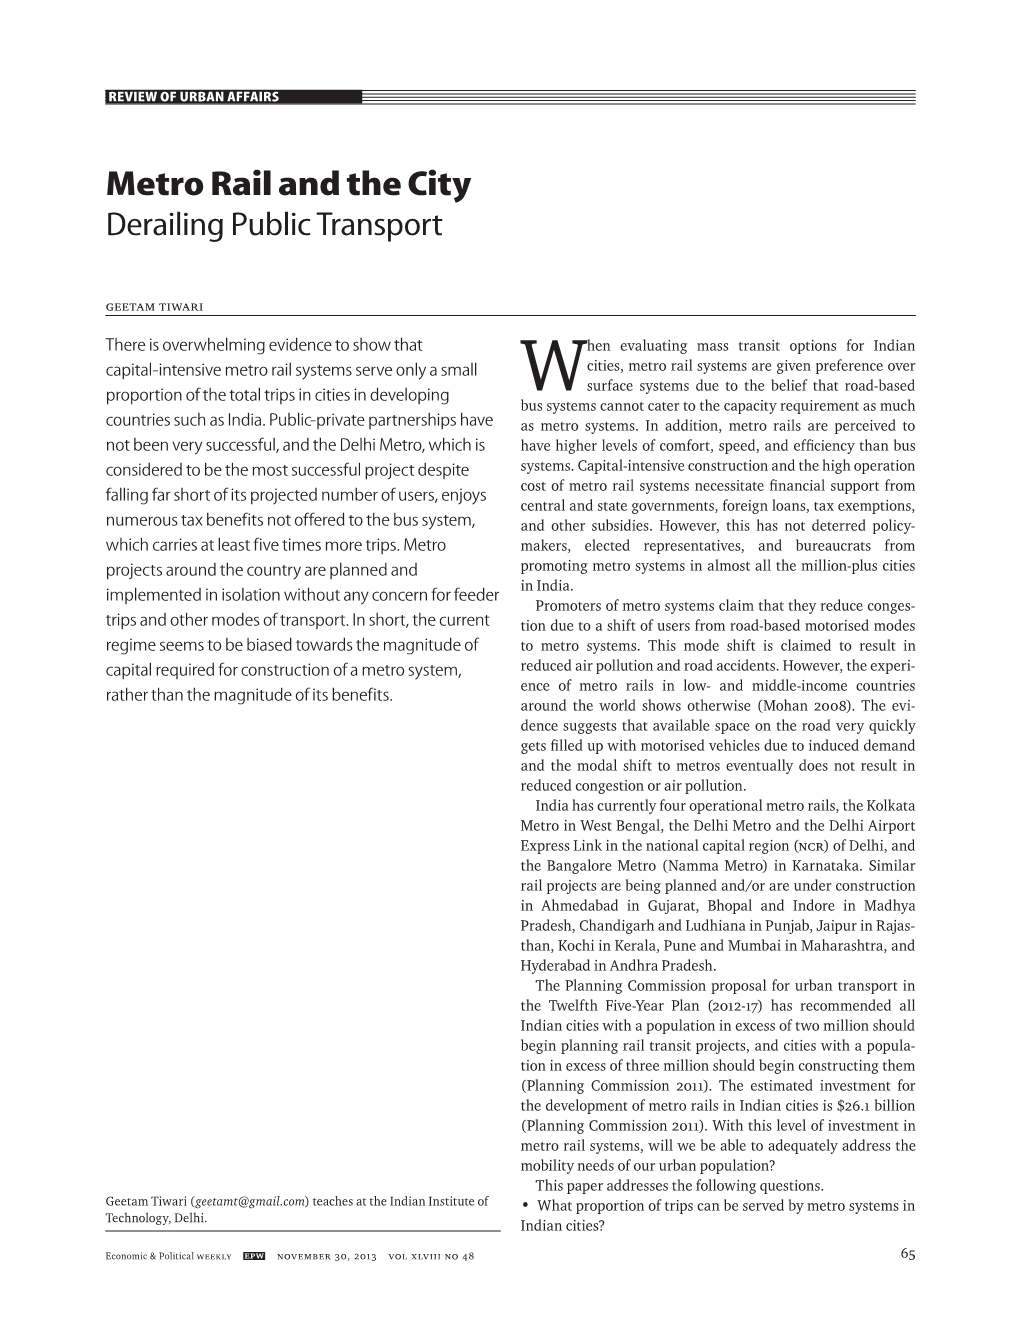 Metro Rail and the City Derailing Public Transport